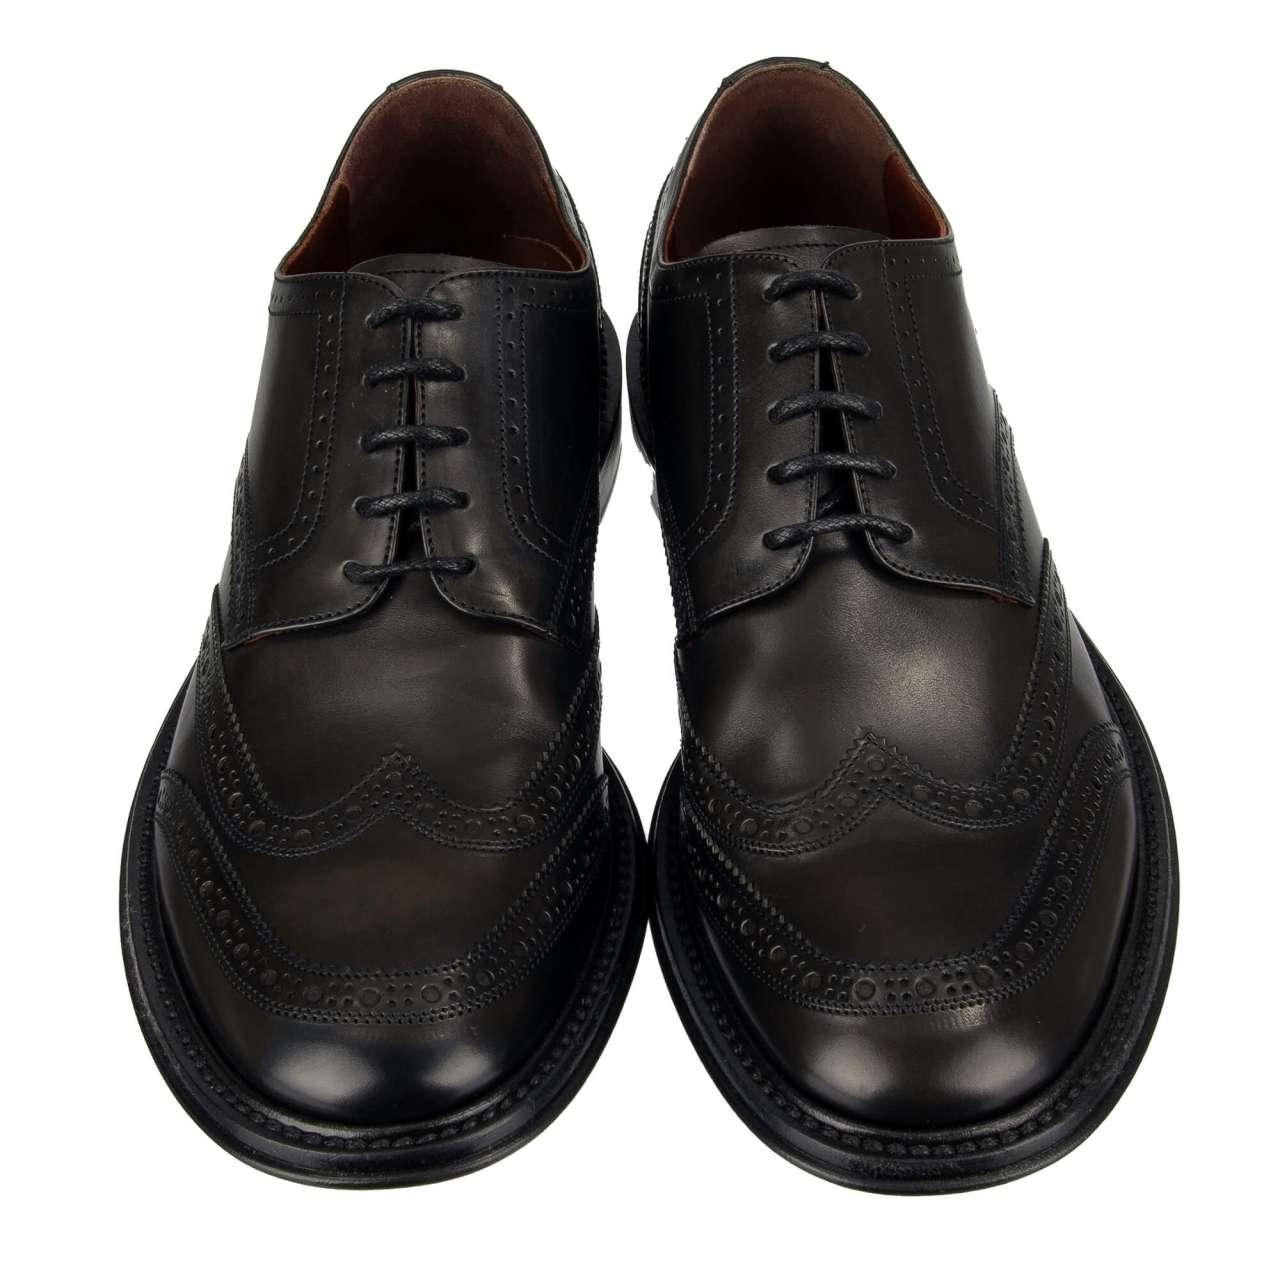 Dolce & Gabbana - DG Logo Formal Calf Leather Derby Shoes MARSALA Black EUR 44.5 In Excellent Condition For Sale In Erkrath, DE